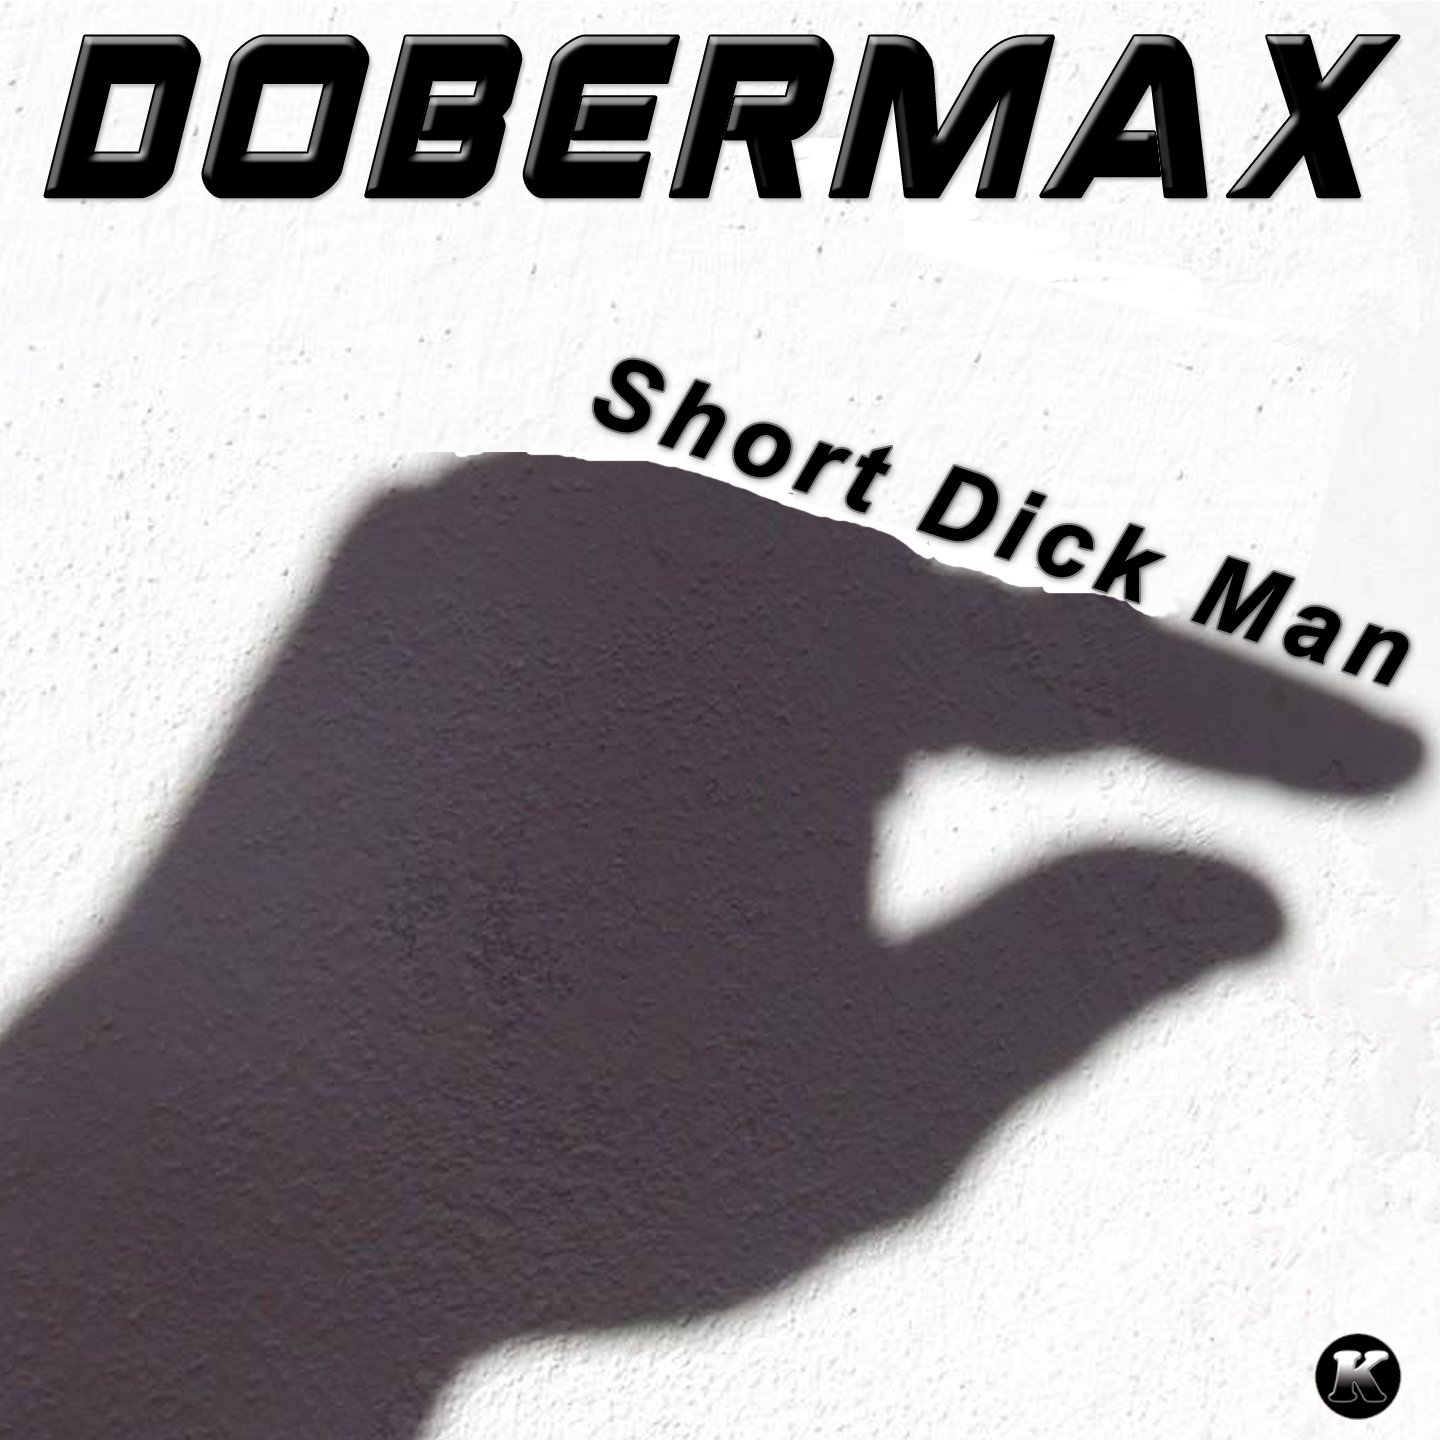 Short dick man слушать. Short dick man текст. Short dick man Автор песни.